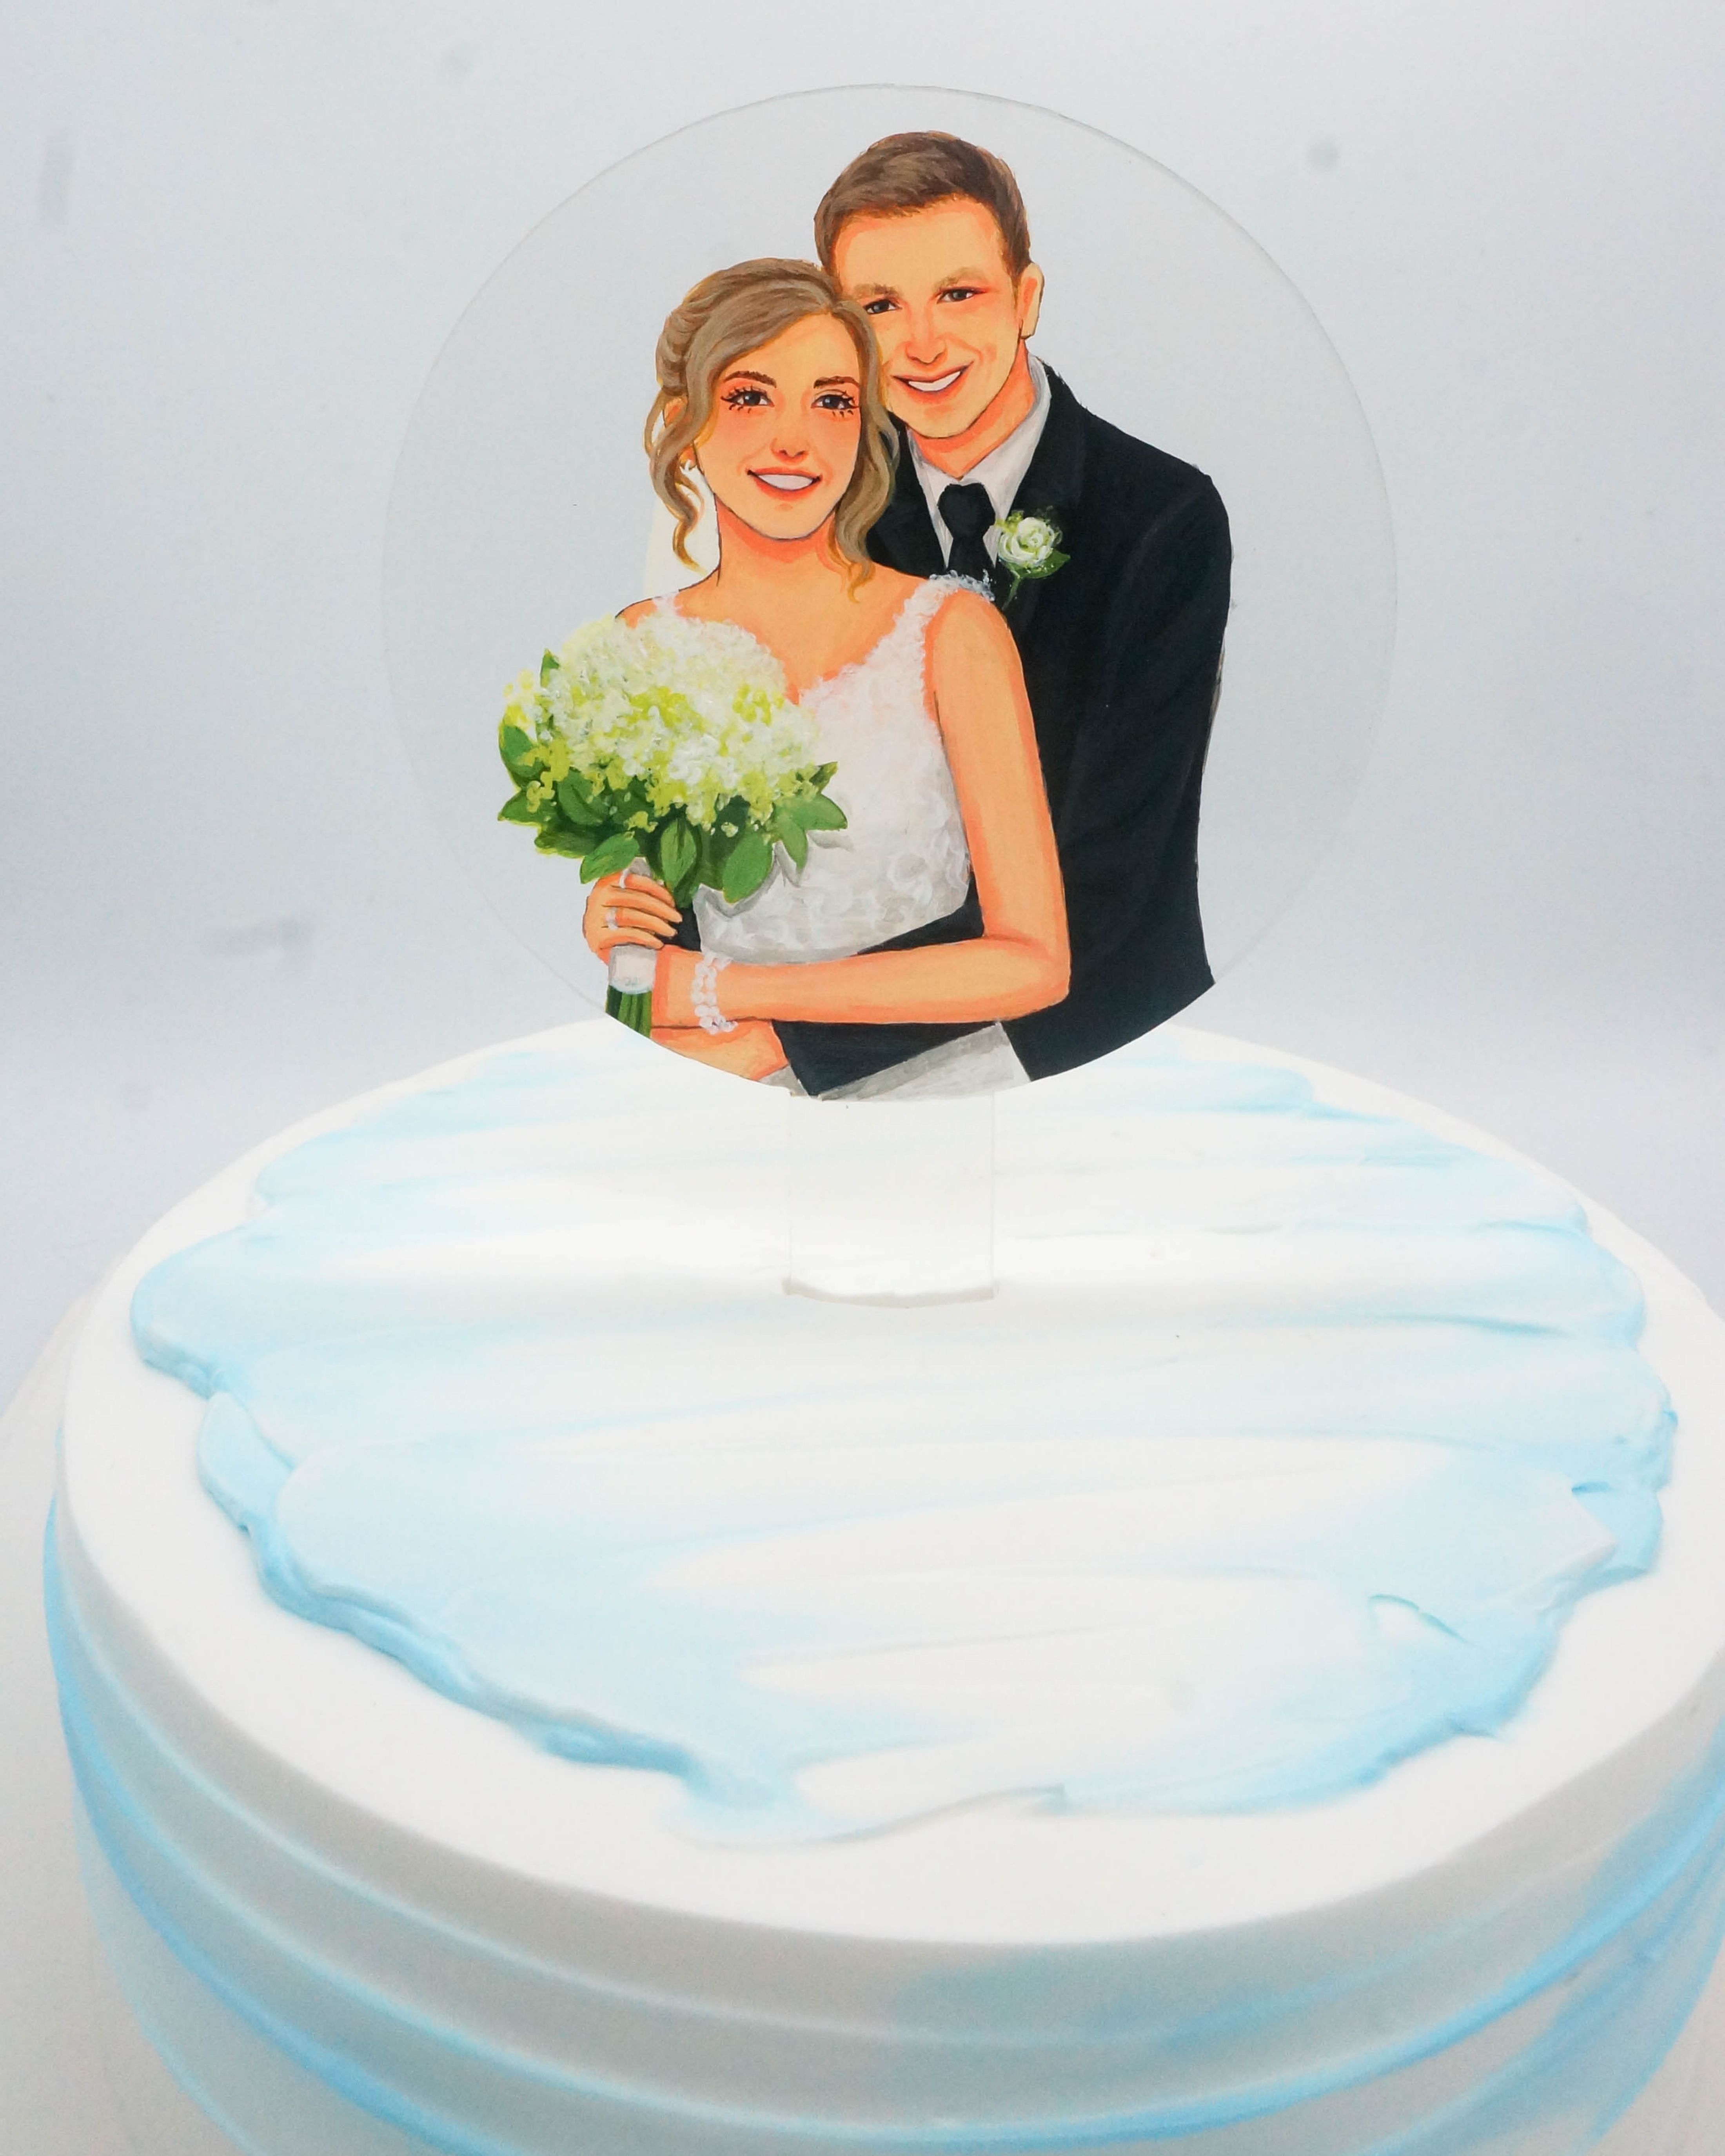 Picture of Custom Bride & Groom Portrait Wedding Cake Topper, Acrylic Glass Painting Wedding Couple